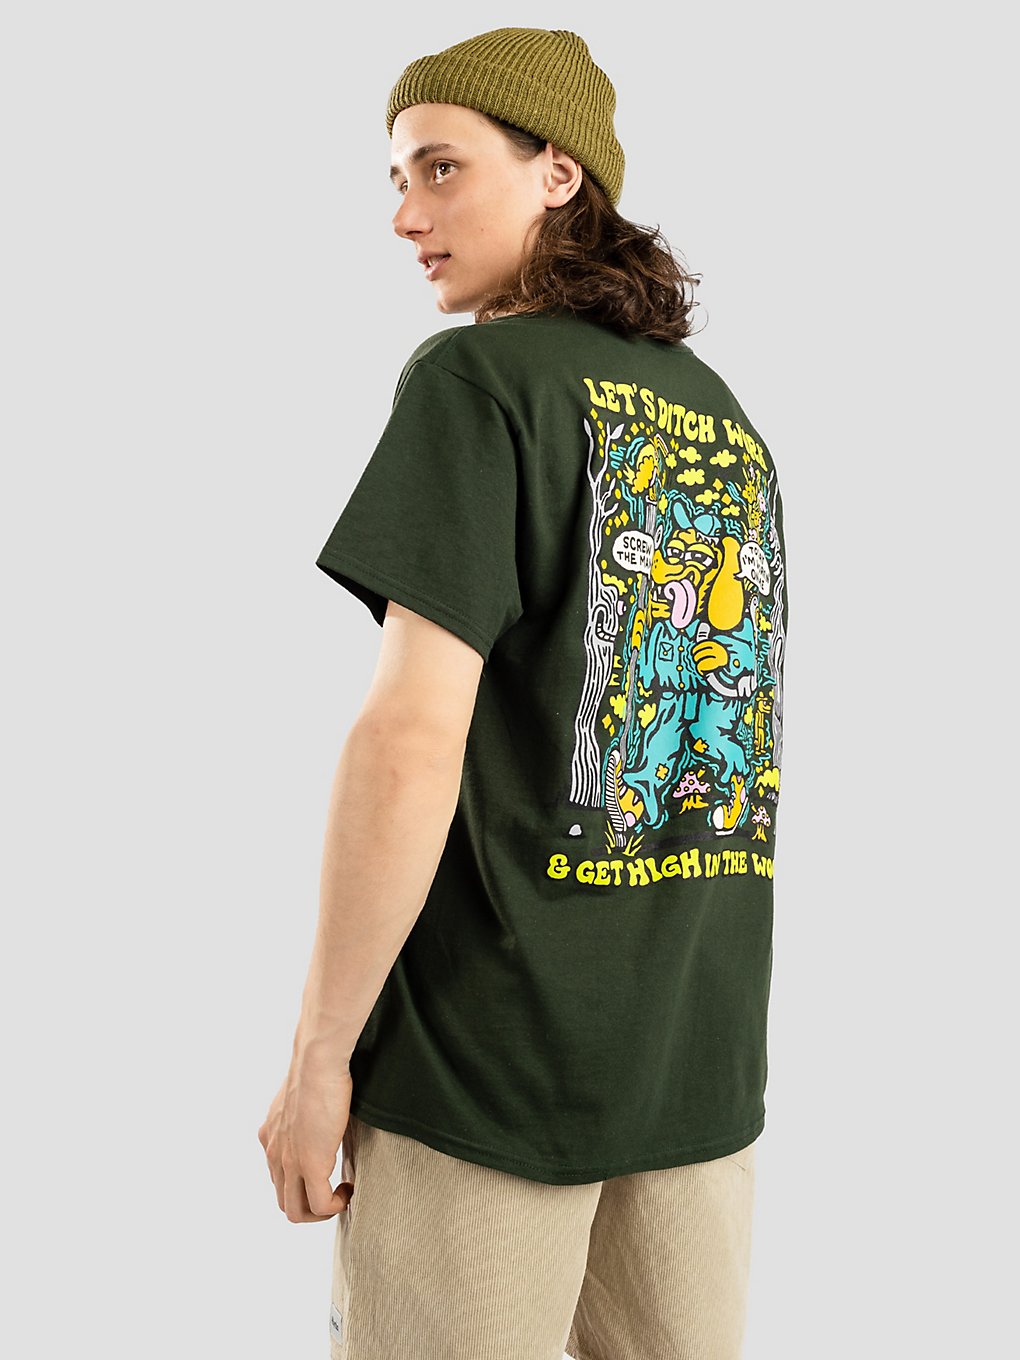 Killer Acid Field Trip T-Shirt dark green kaufen